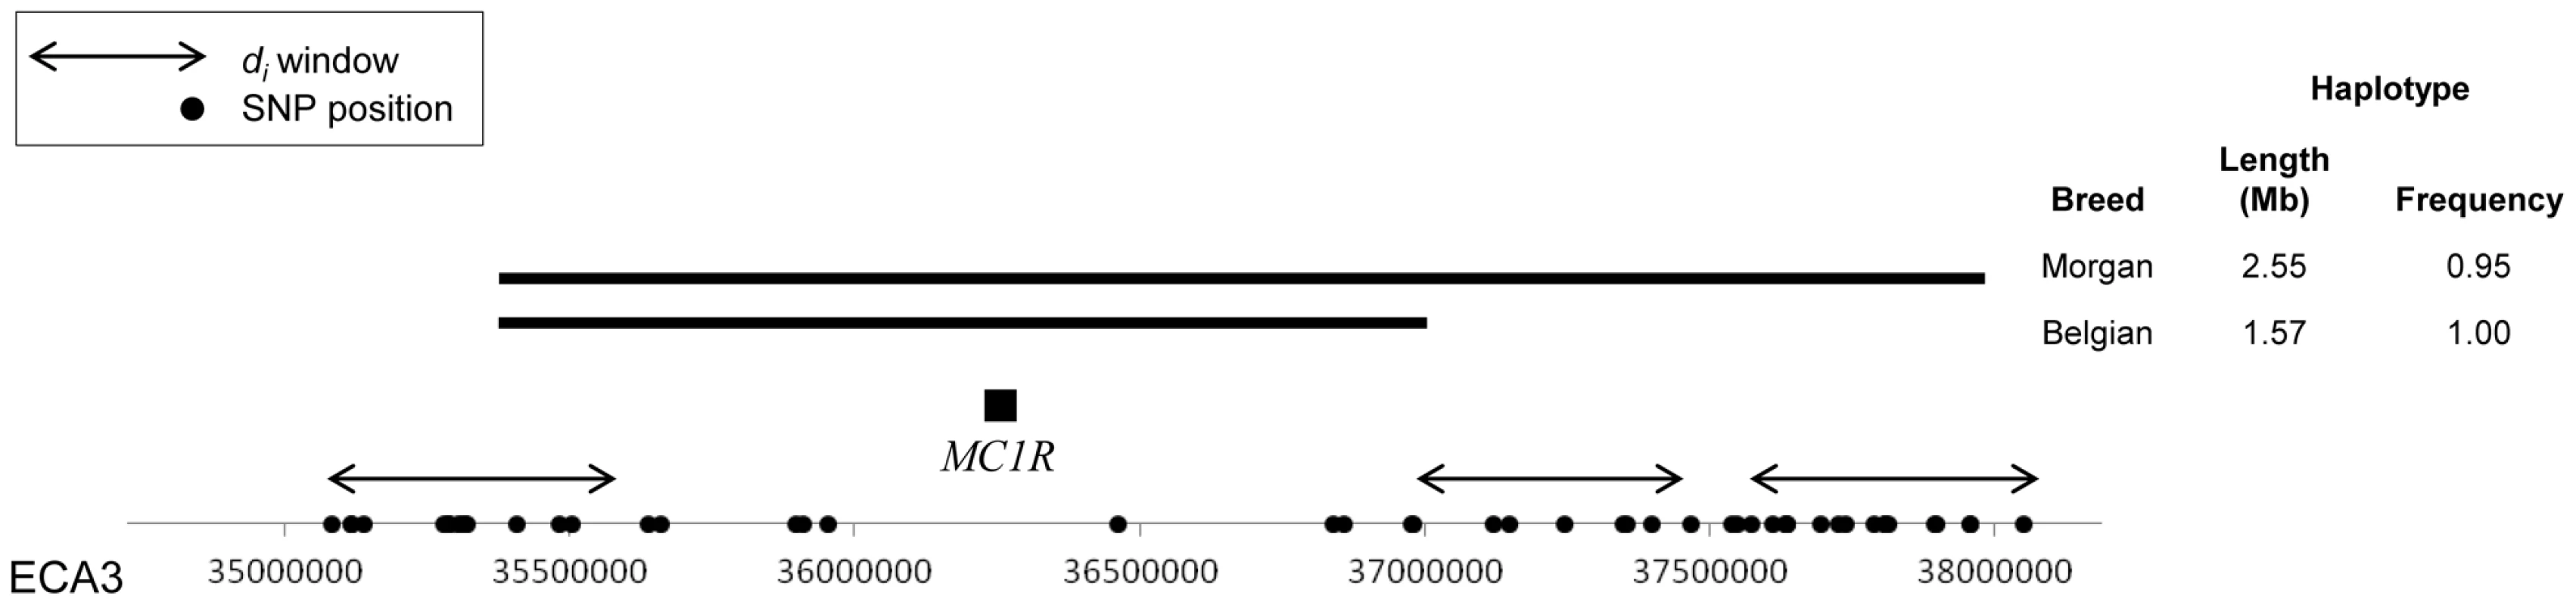 Haplotypes surrounding the <i>MC1R</i> locus in the Morgan and Belgian.